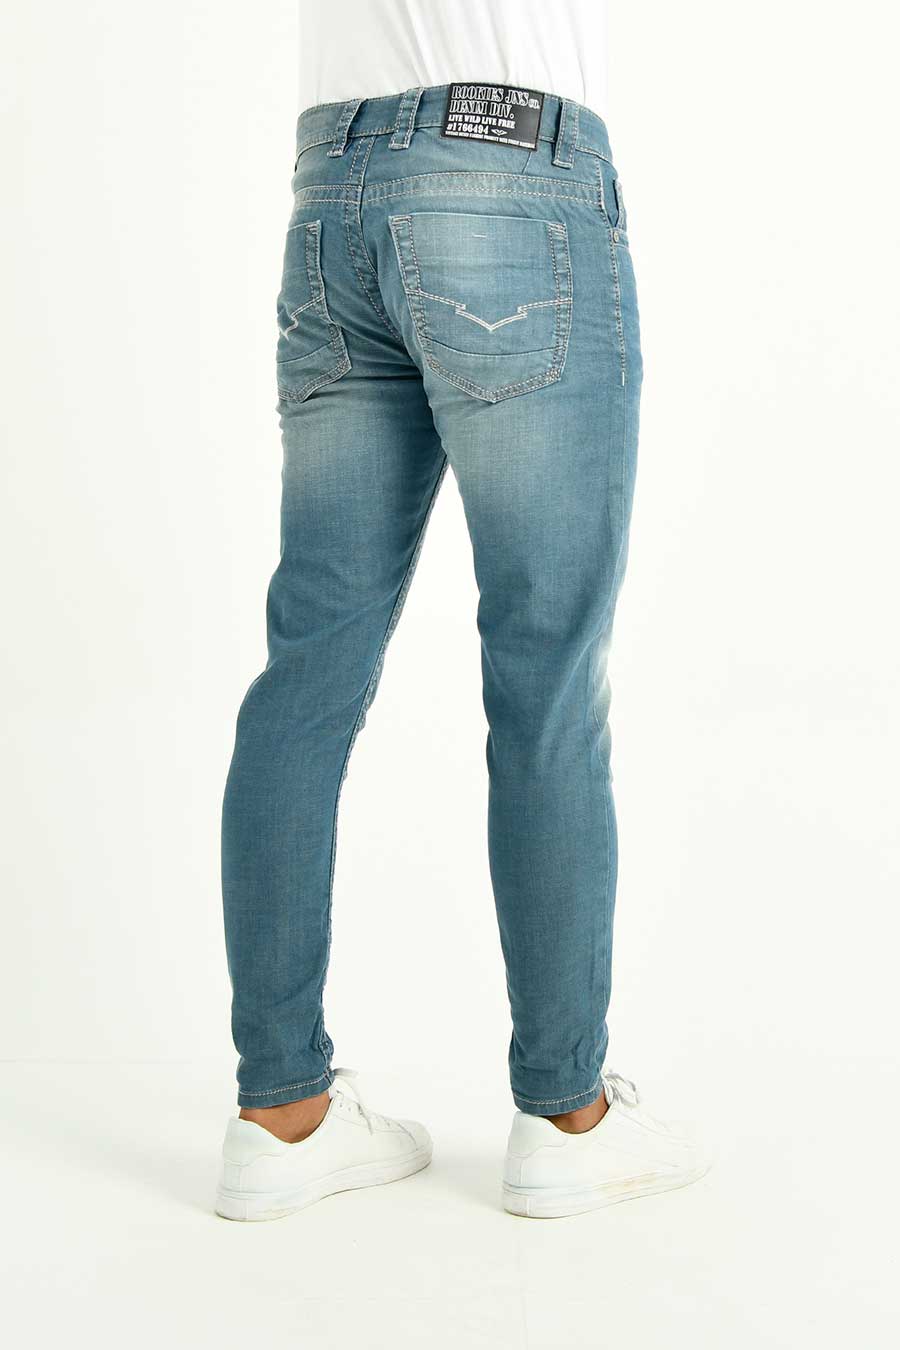 Men’s Denim Jeans-RJ3969